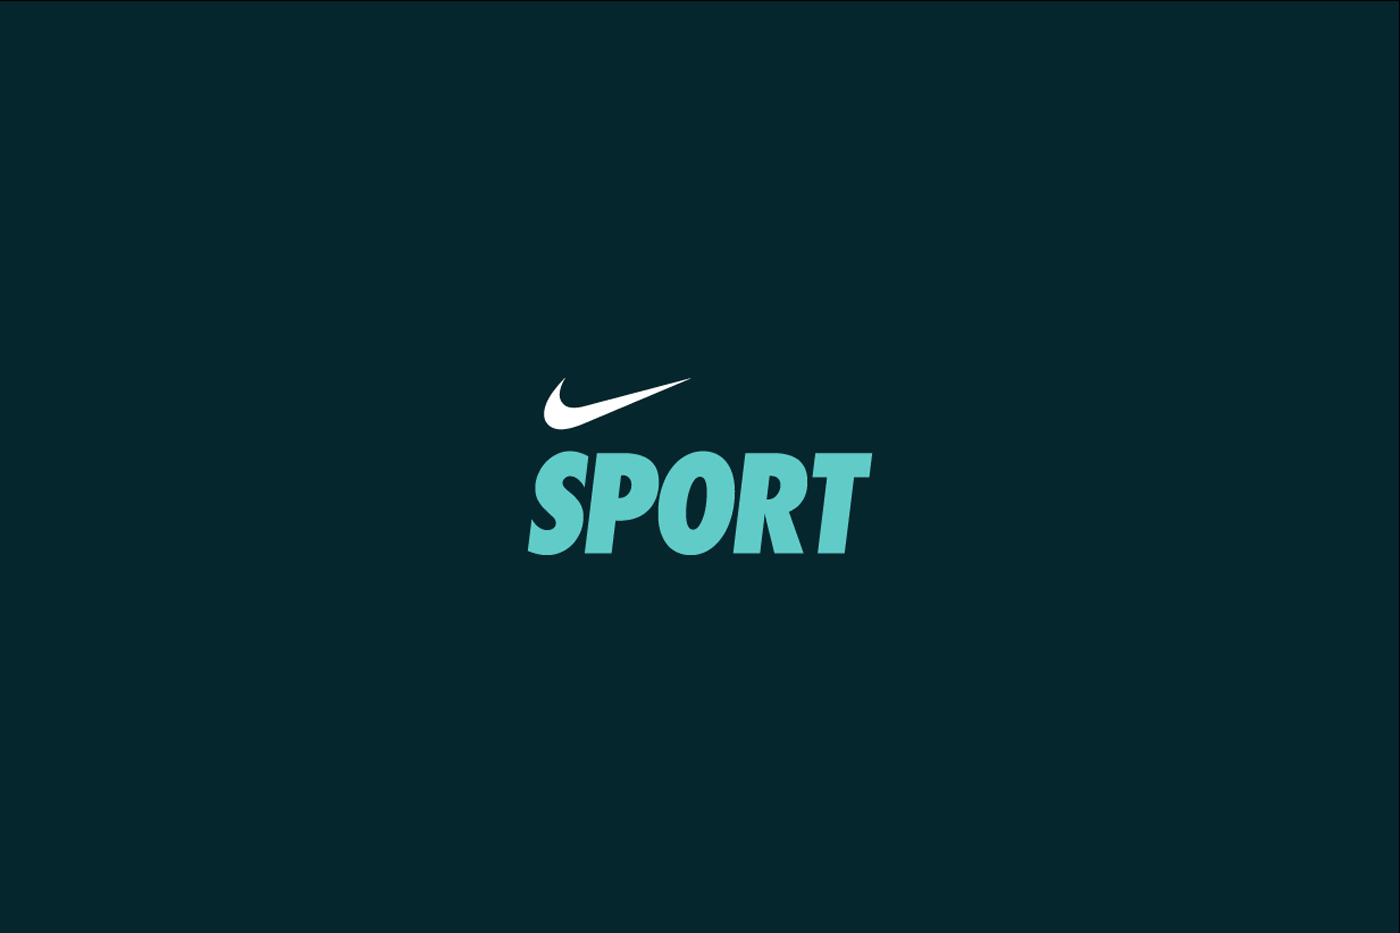 Nike sport logo animation gif | Behance